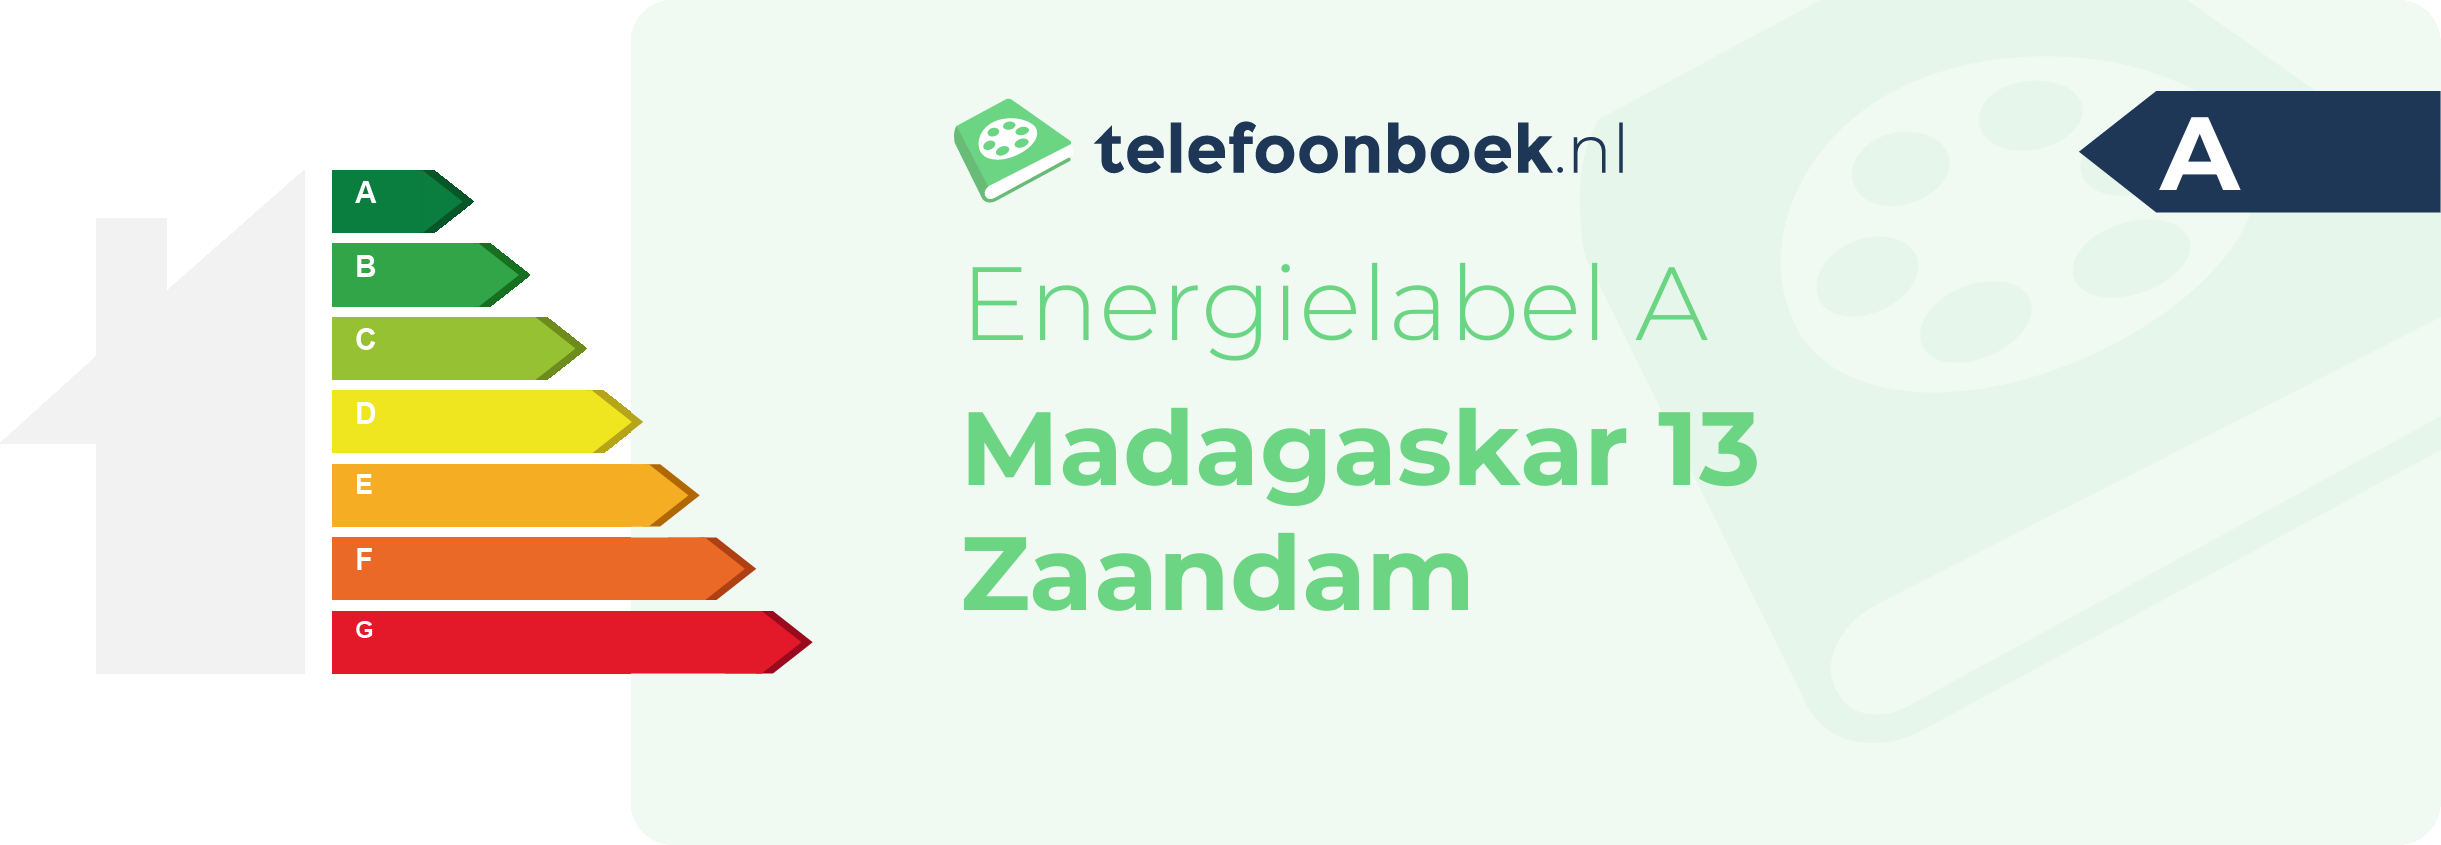 Energielabel Madagaskar 13 Zaandam